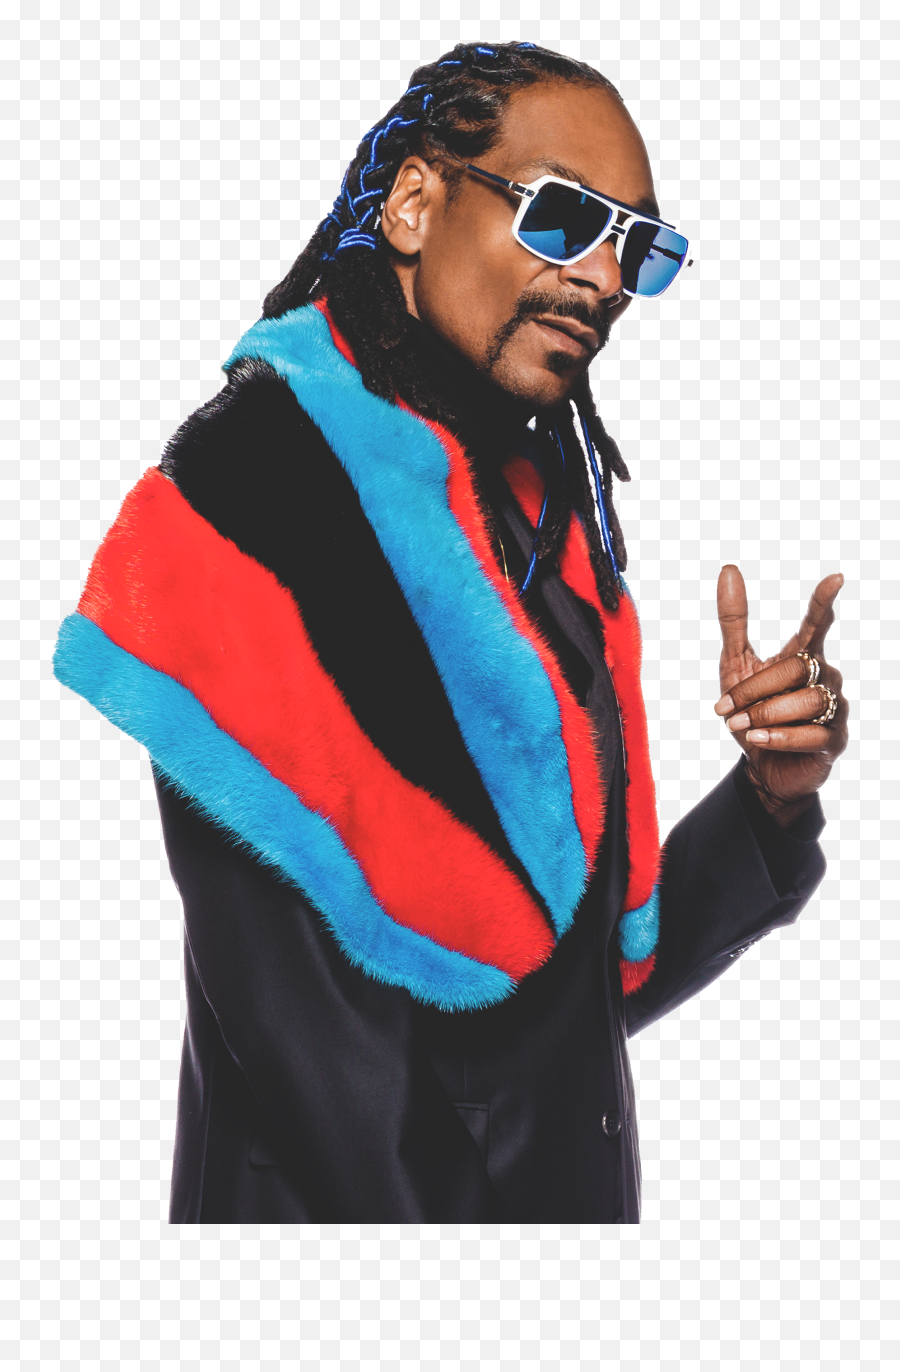 Snoop Dogg Png Image - Snoop Dogg Rupp Arena,Snoop Dogg Png